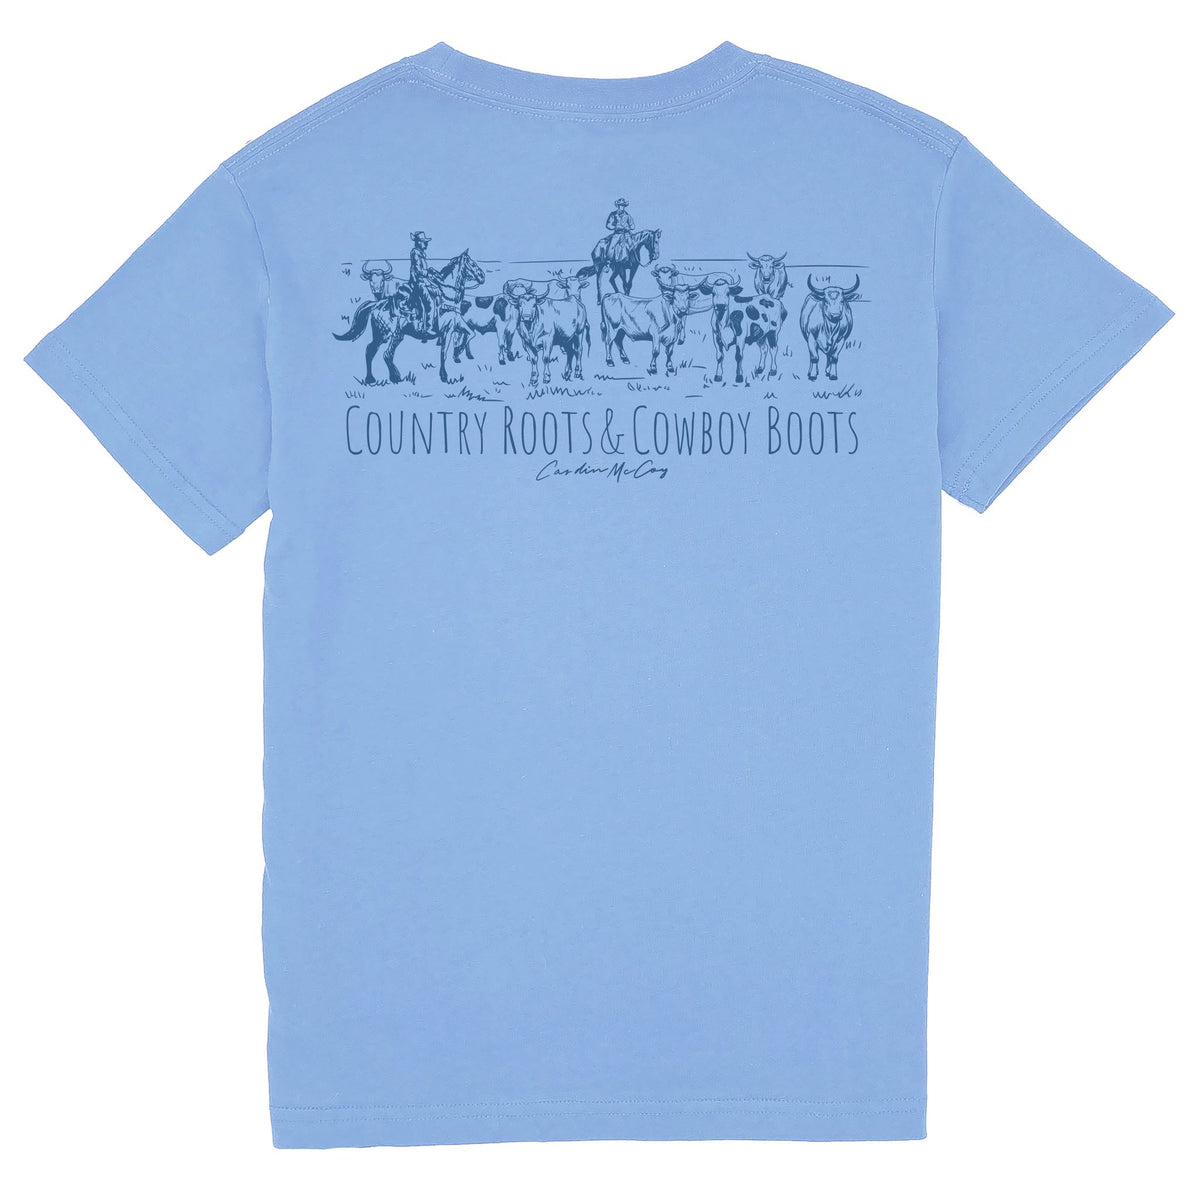 Kids' Country Roots & Cowboy Boots Short Sleeve Tee Short Sleeve T-Shirt Cardin McCoy Carolina Blue XXS (2/3) 